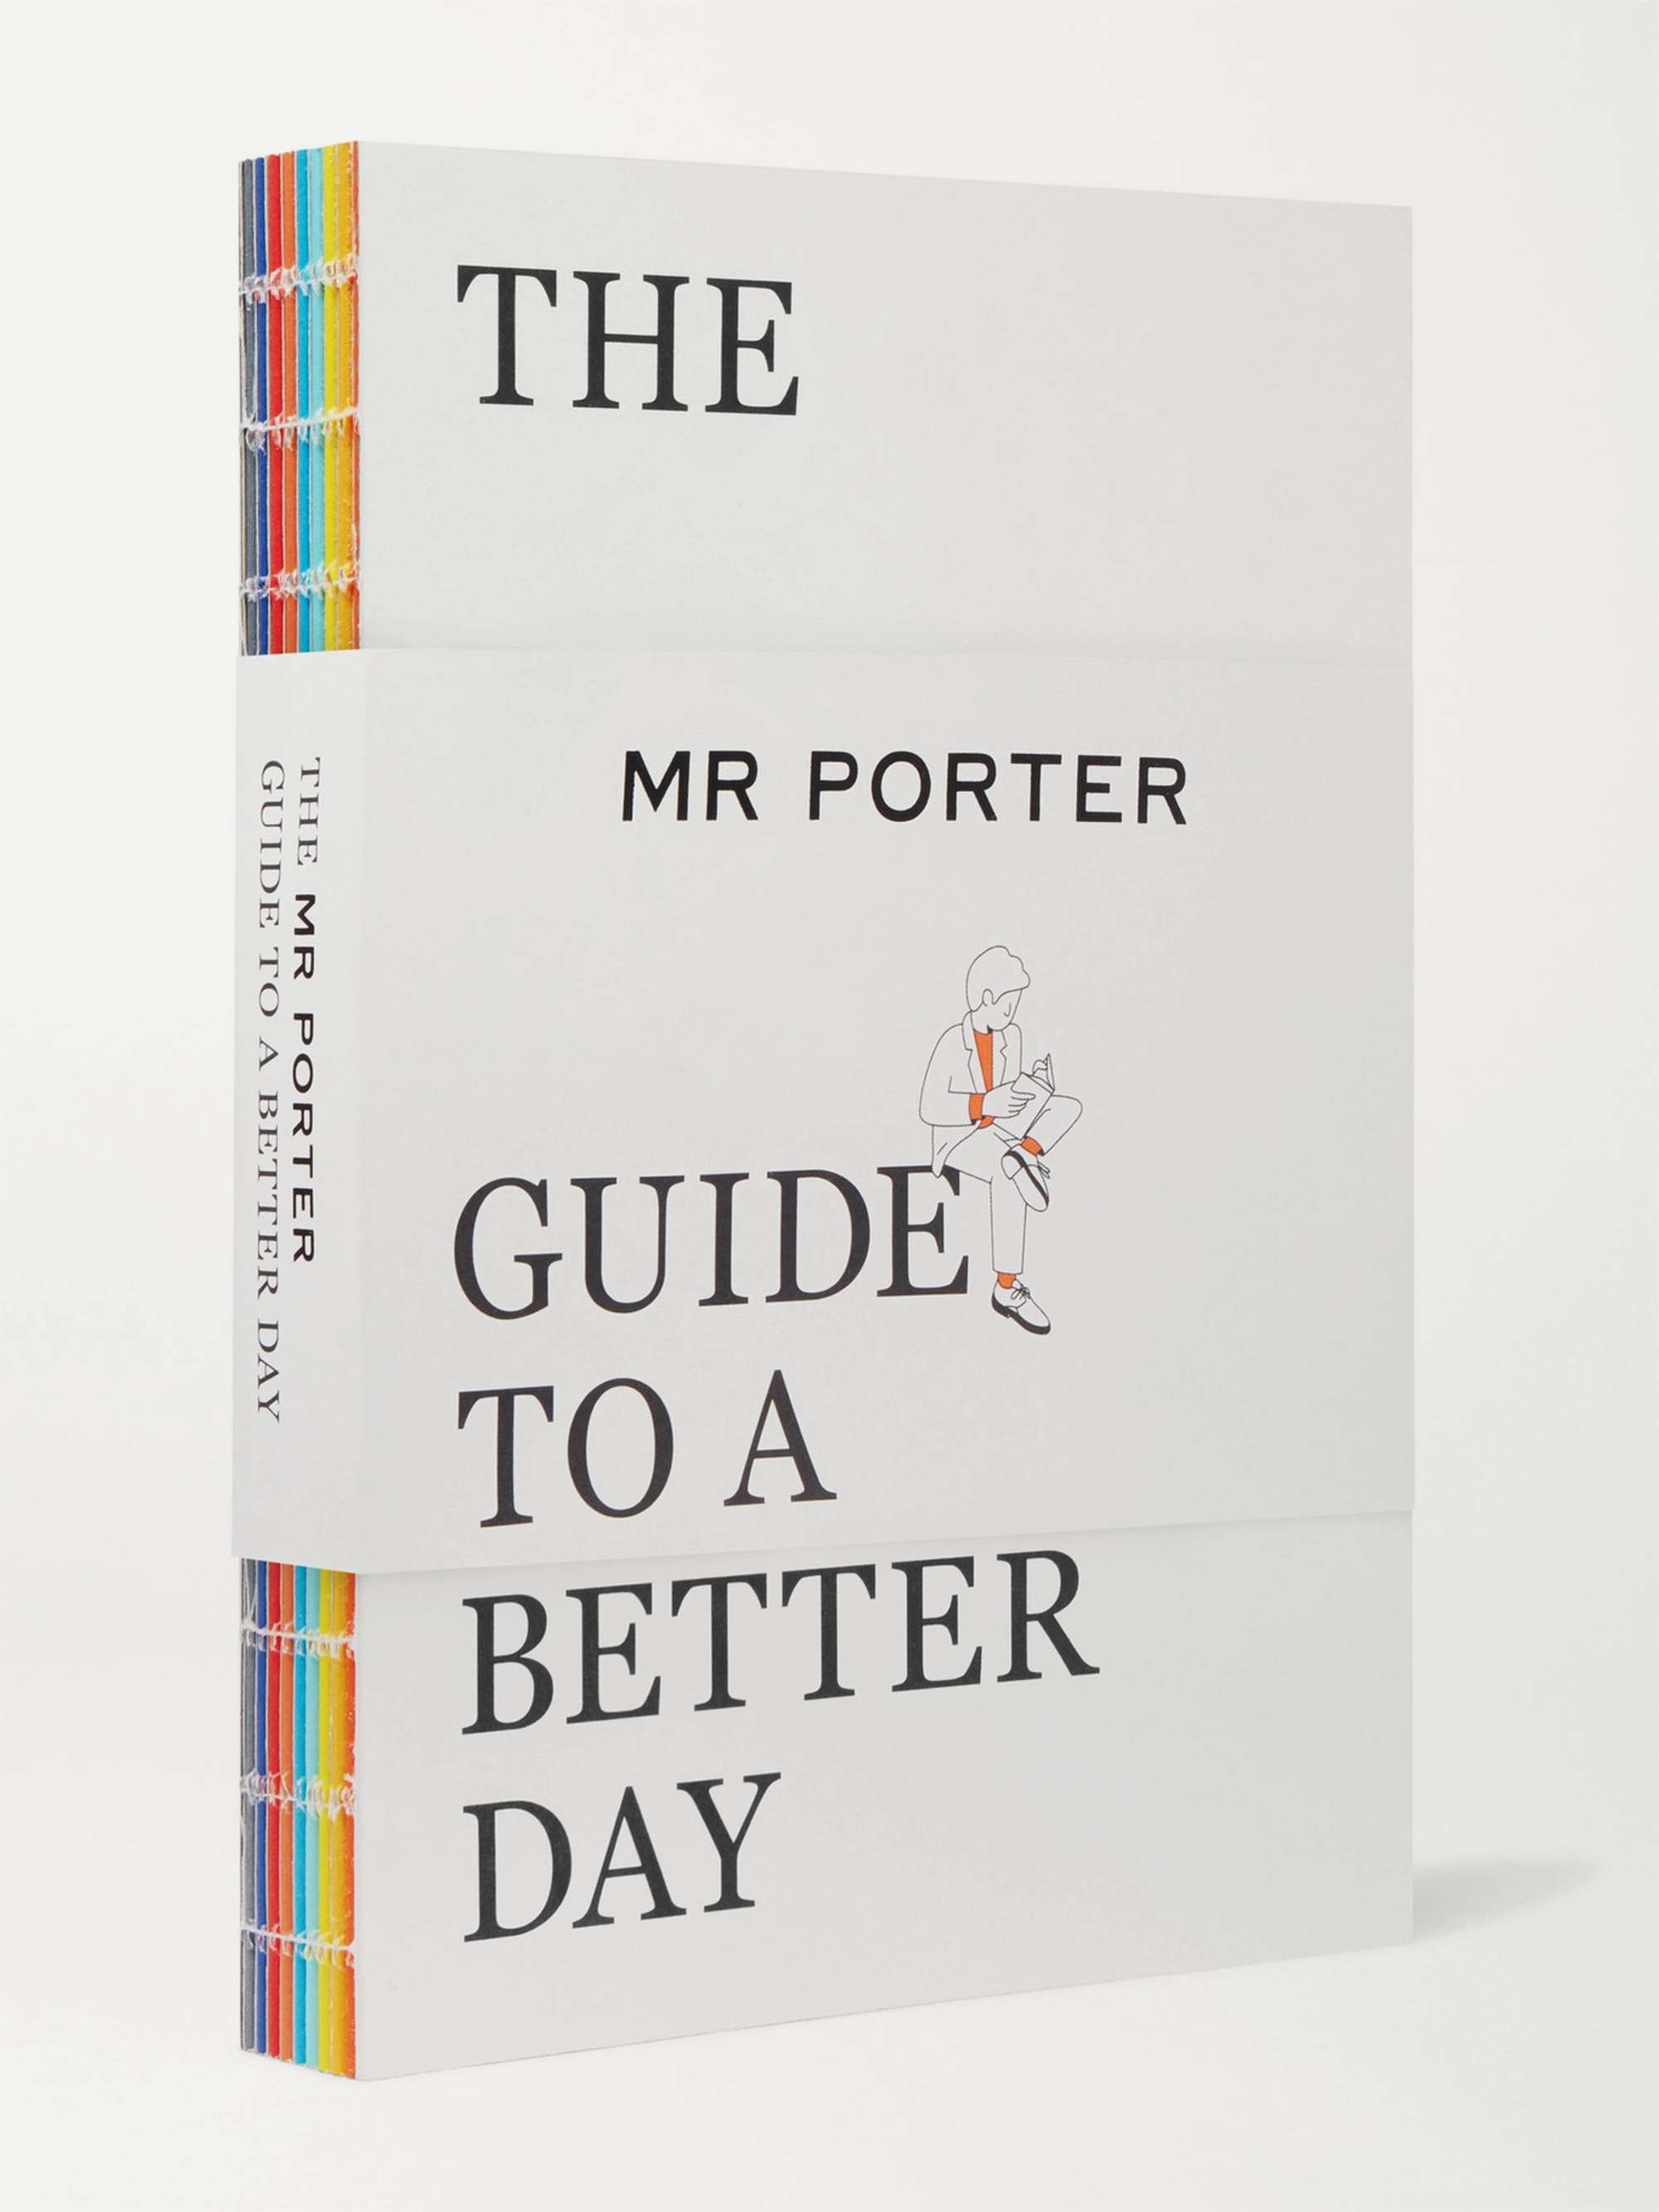 THE MR PORTER PAPERBACK The MR PORTER Guide to a Better Day Paperback Book  for Men | MR PORTER